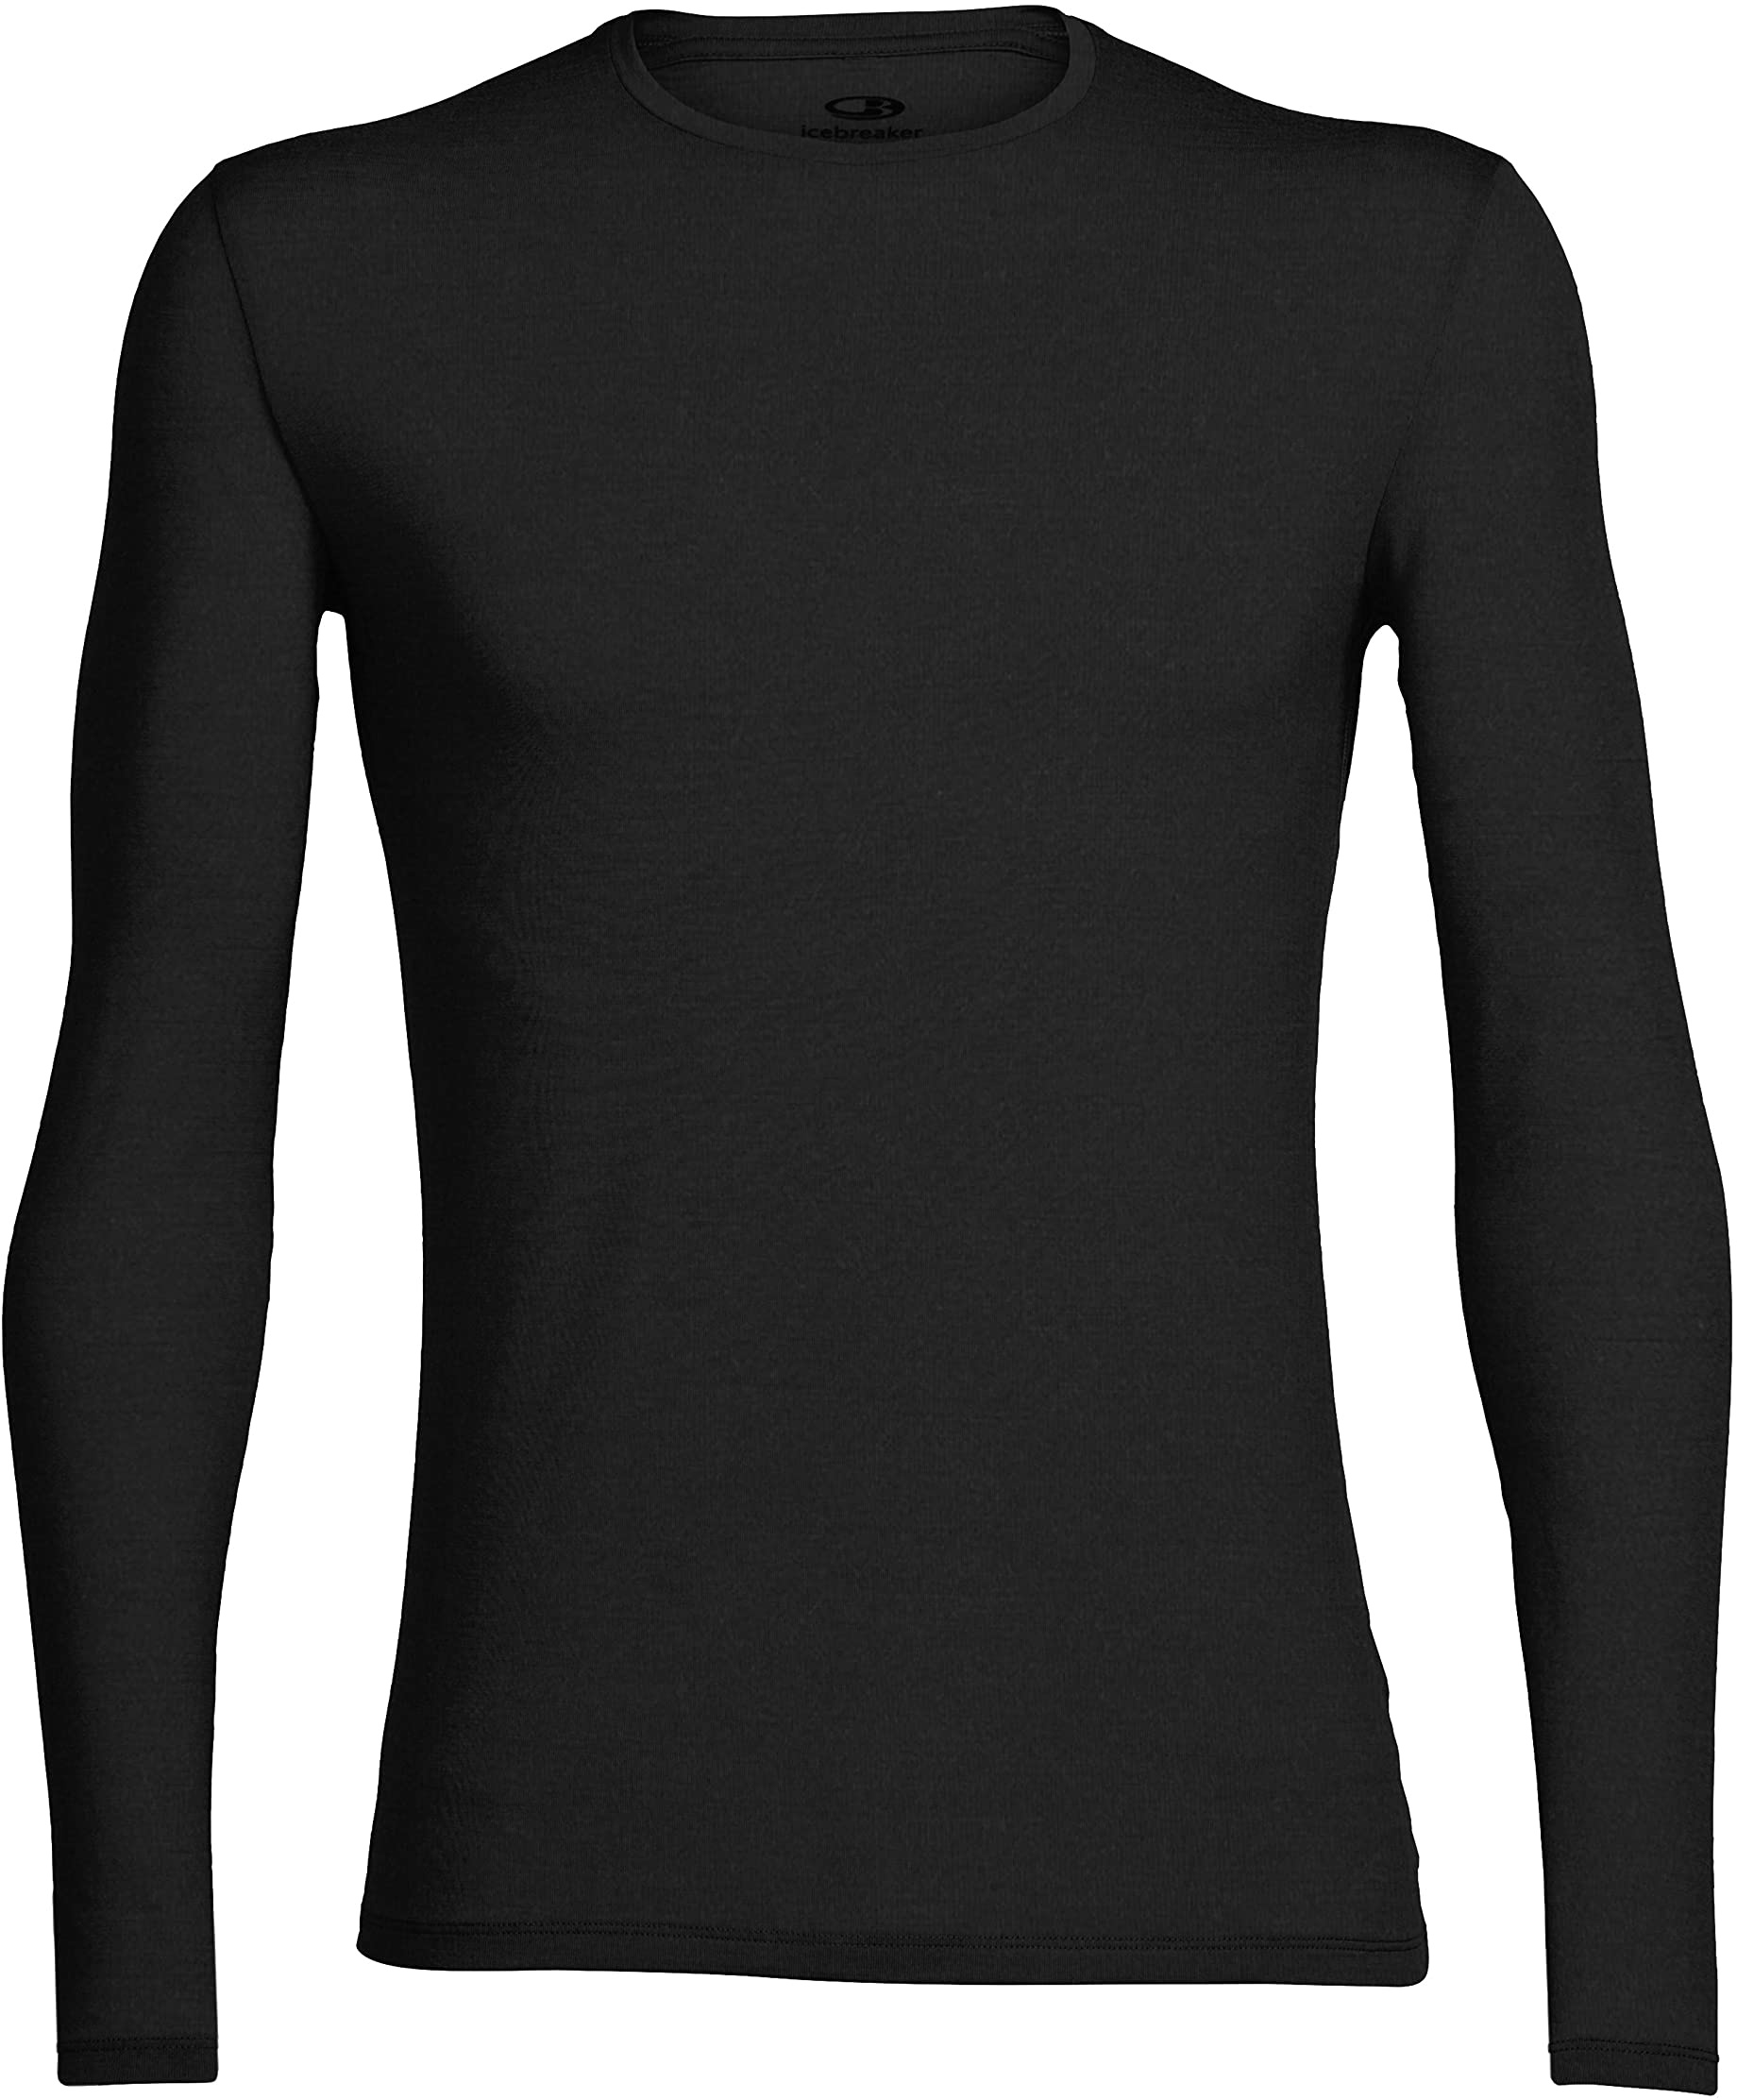 Icebreaker Herren Merino Wolle Anatomica Langarm Crewe T-Shirt - 150 Ultraleichtes Material - Schwarz, L